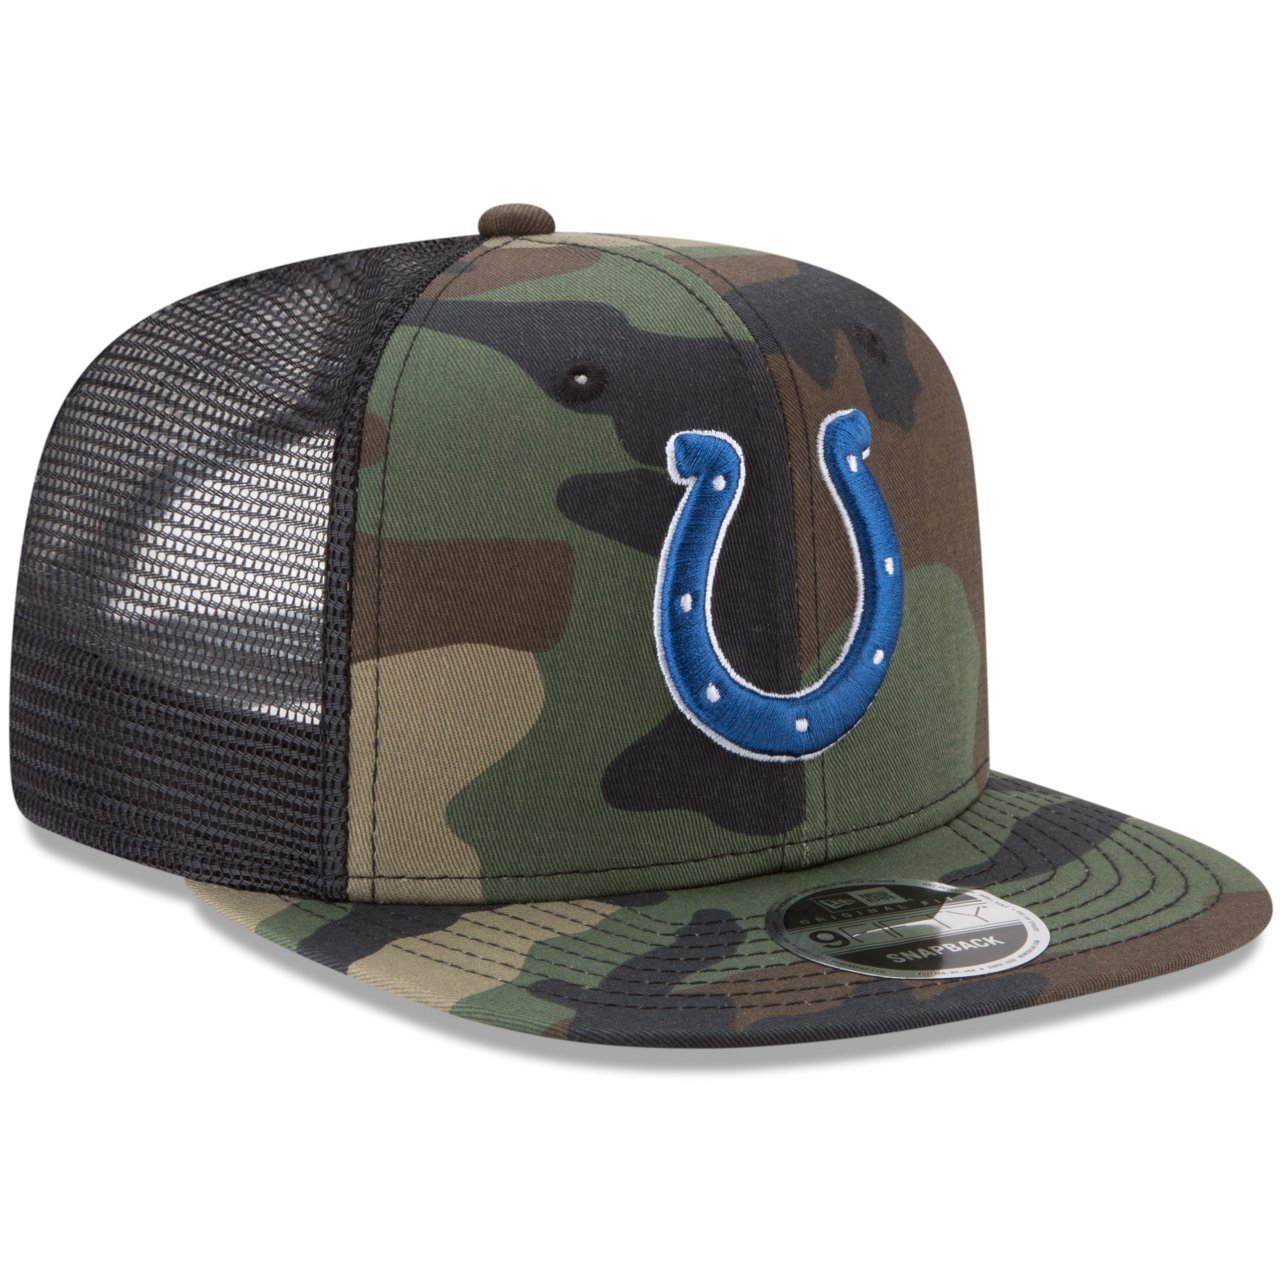 New Era Snapback Cap 9Fifty Colts Indianapolis